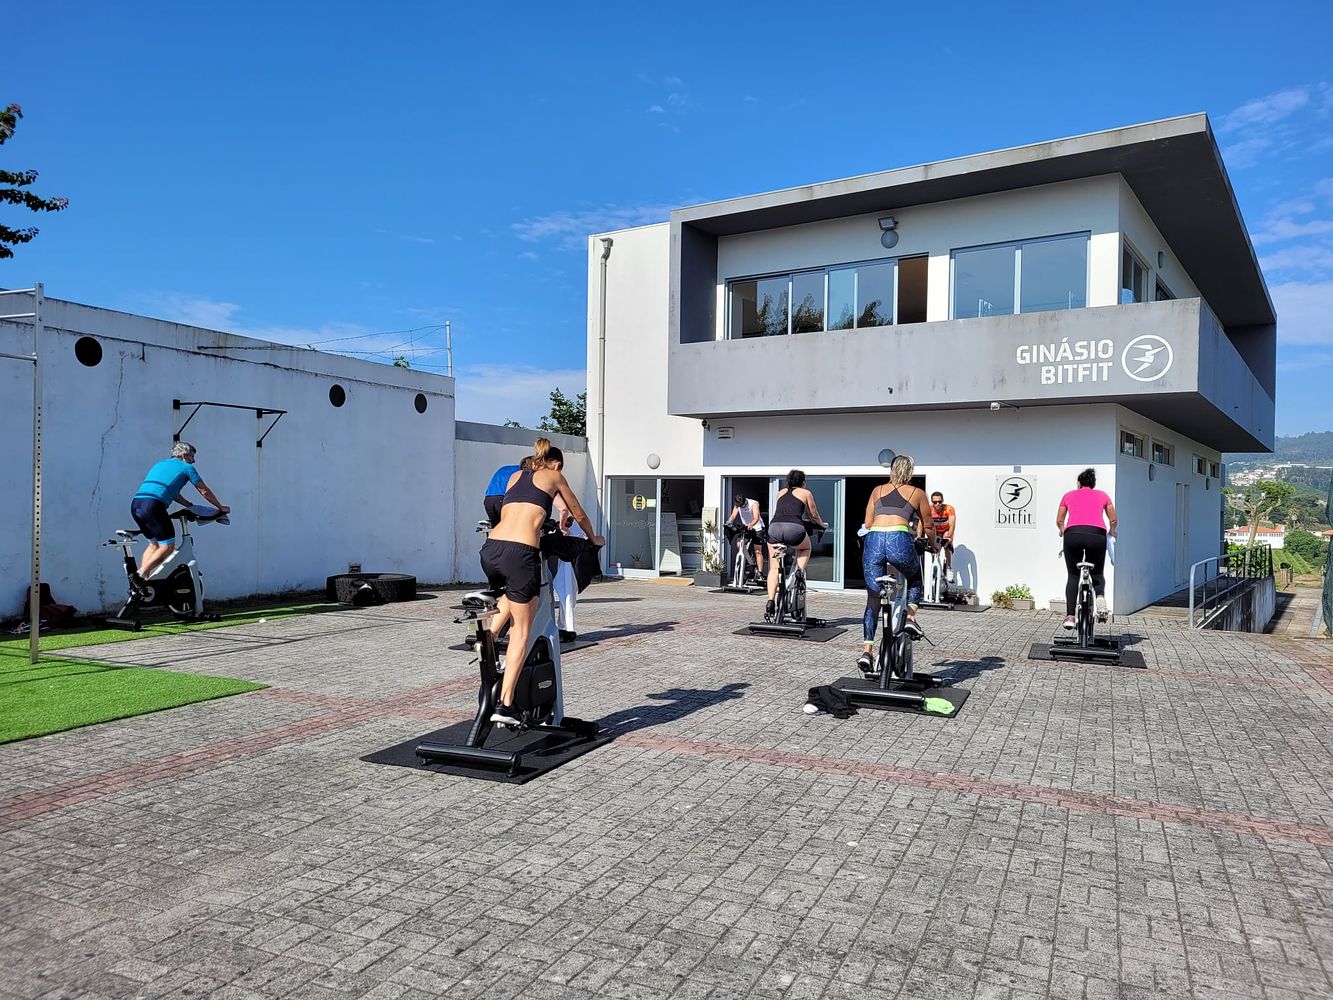 Bitfit gym in Paredes, Portugal